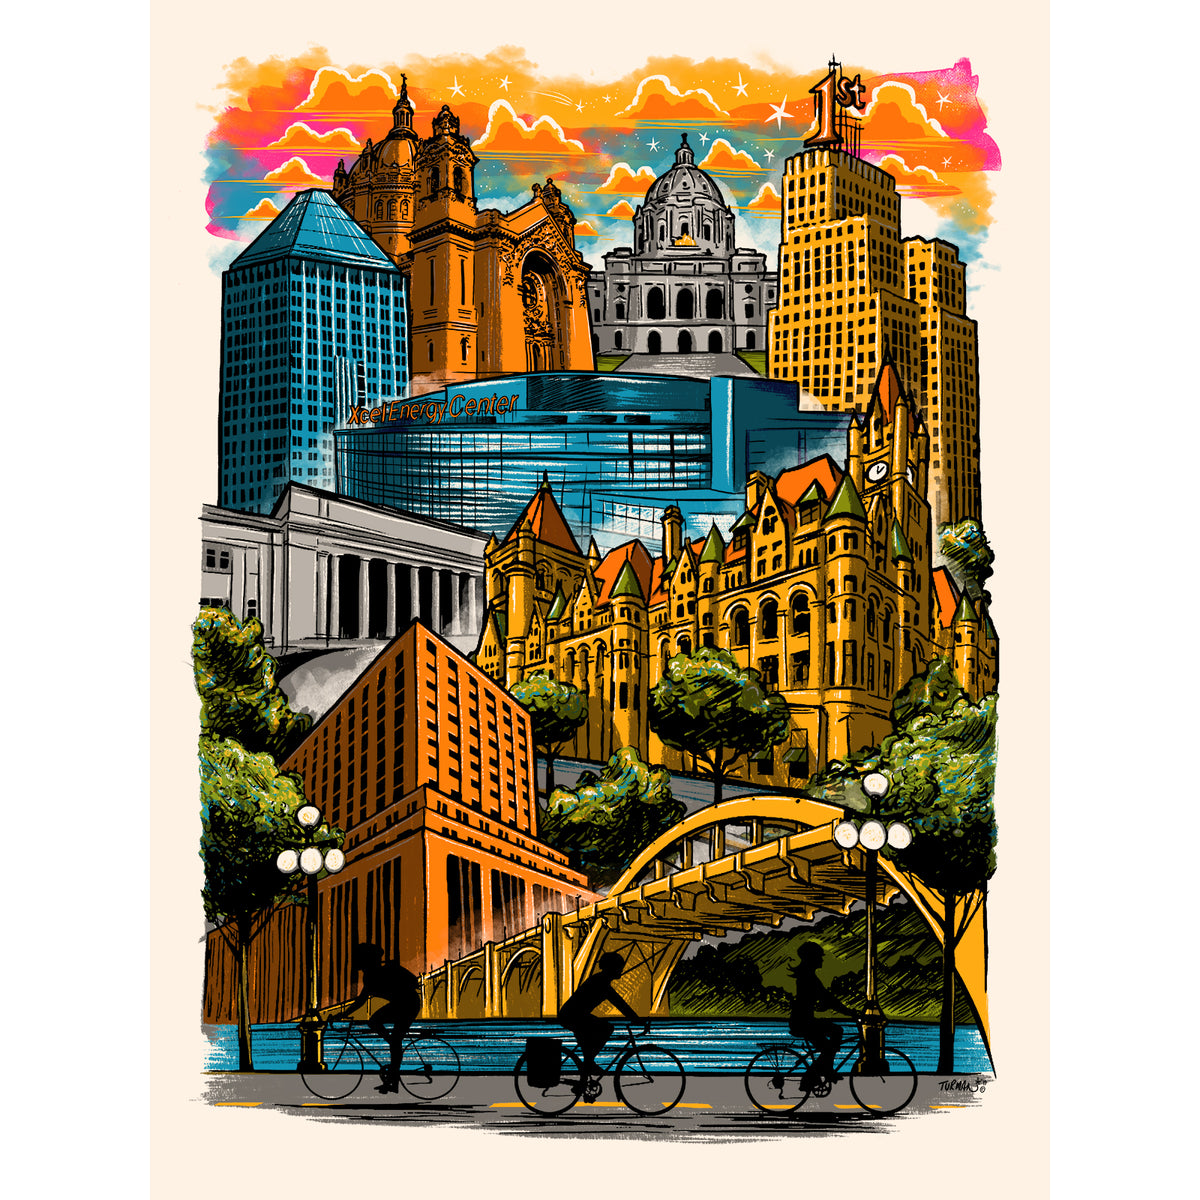  Saint Paul Skyline Print, St. Paul, Minnesota, Mississippi  River, Twin Cities, River Reflection - Travel Photography, Print, Wall Art  : Handmade Products